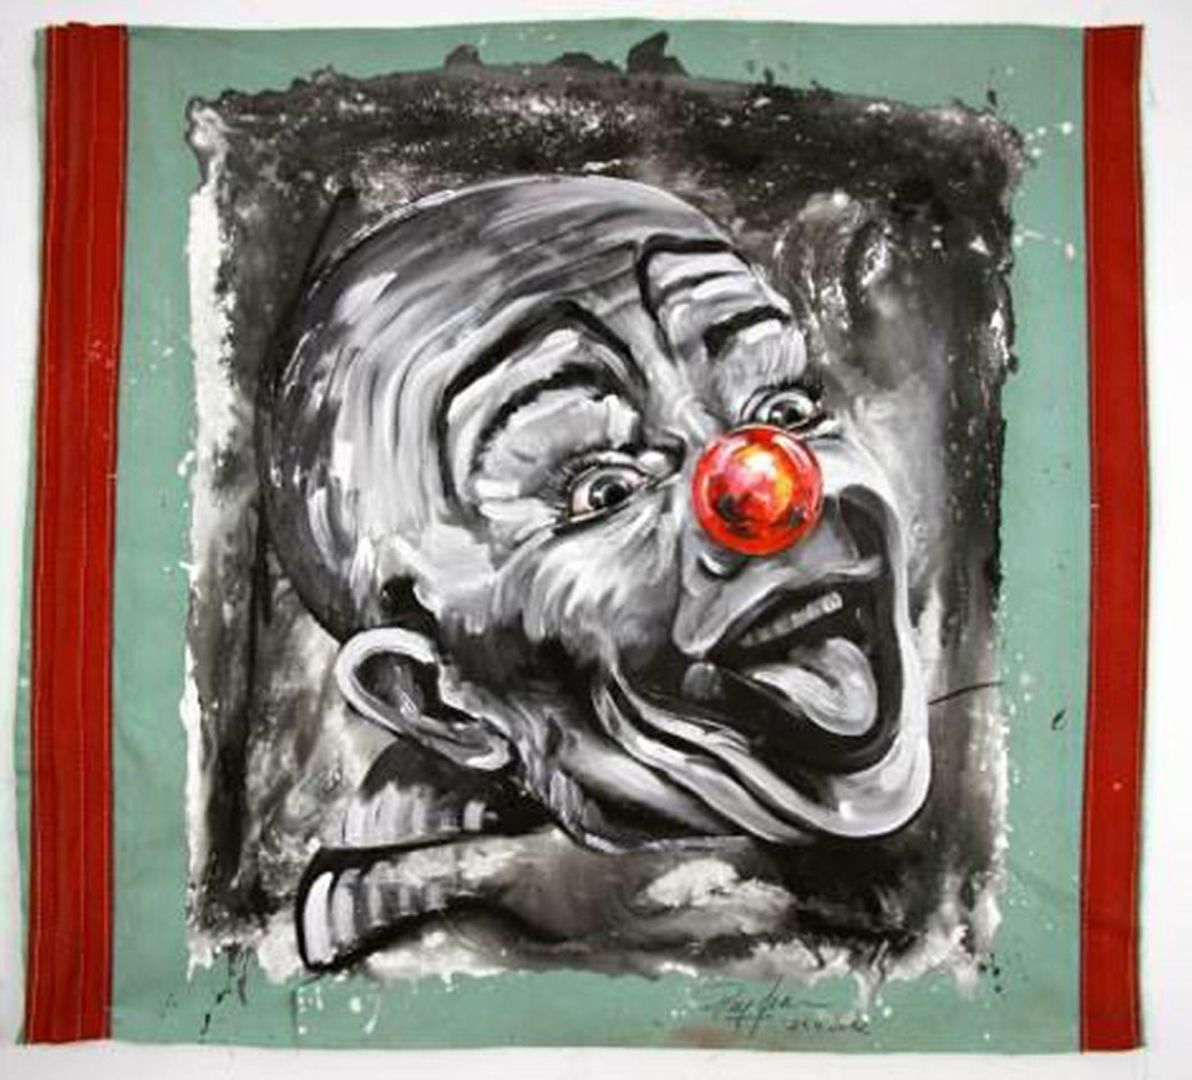 Clown mit roter Nase